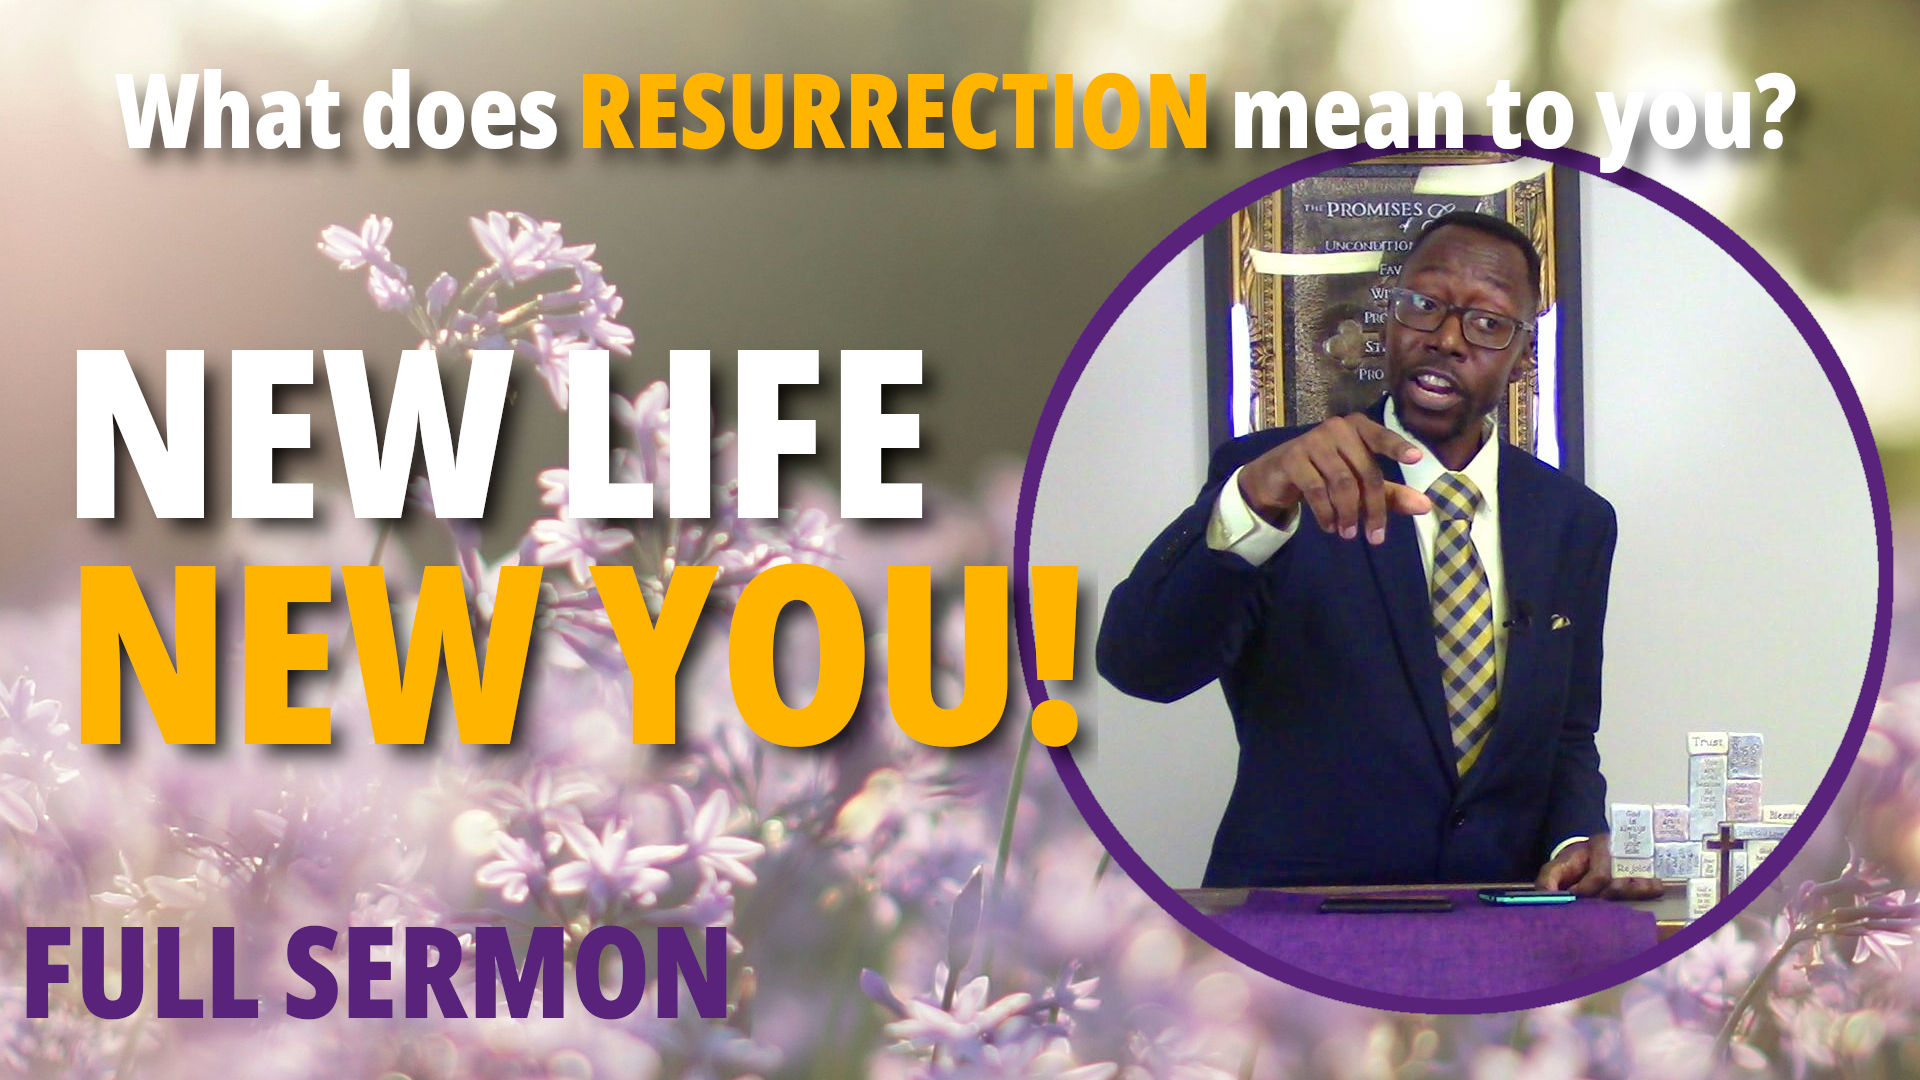 New Life New You Sermon Banner